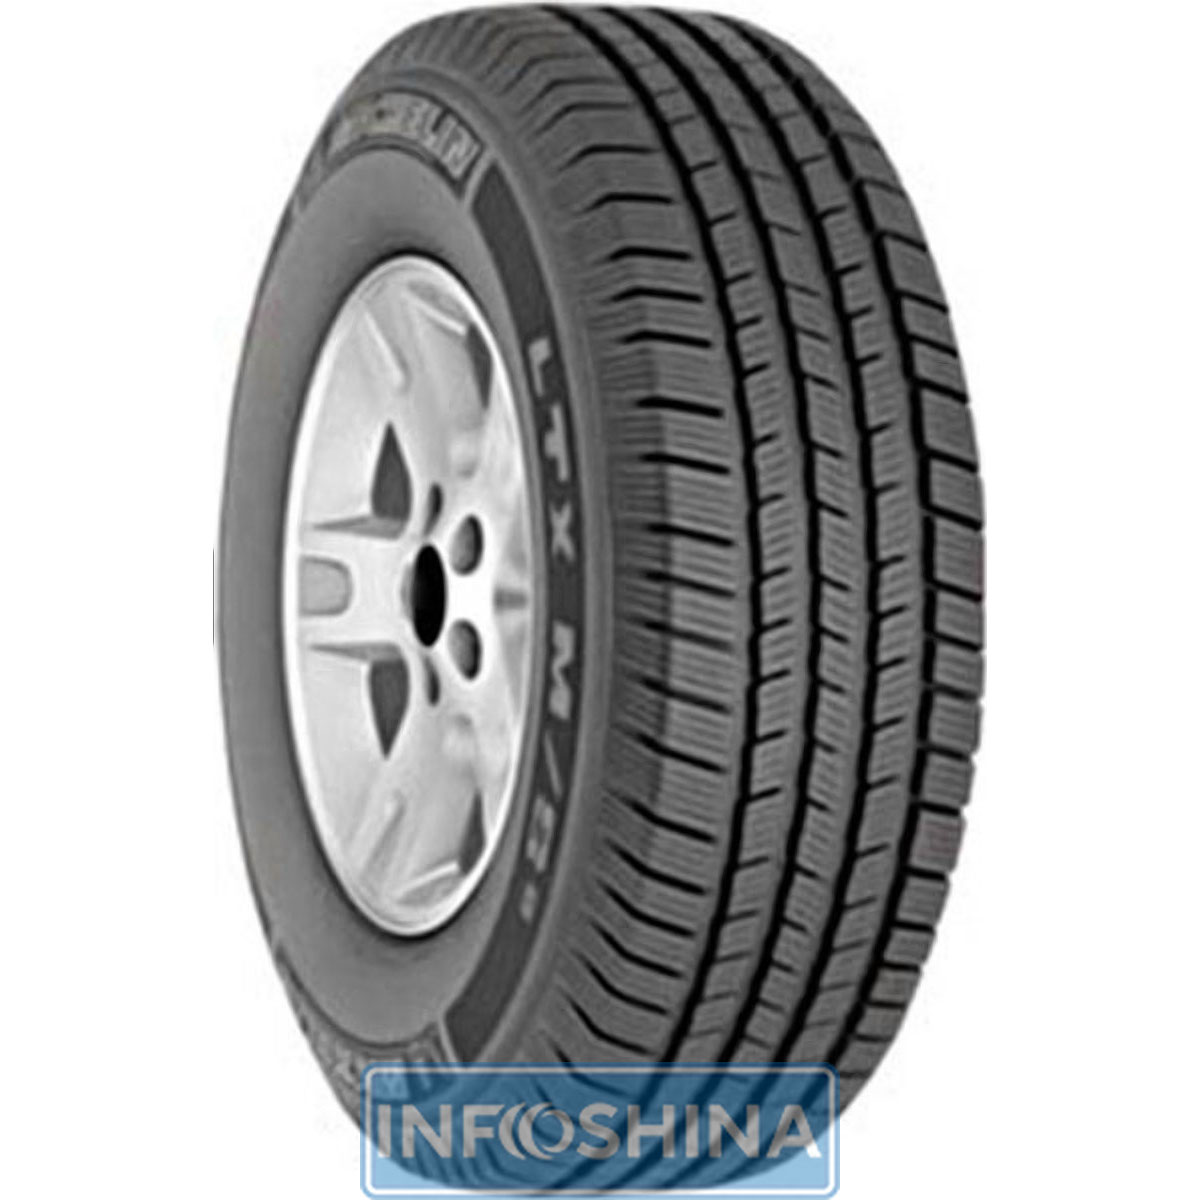 Купить шины Michelin LTX M/S2 255/70 R16 109T